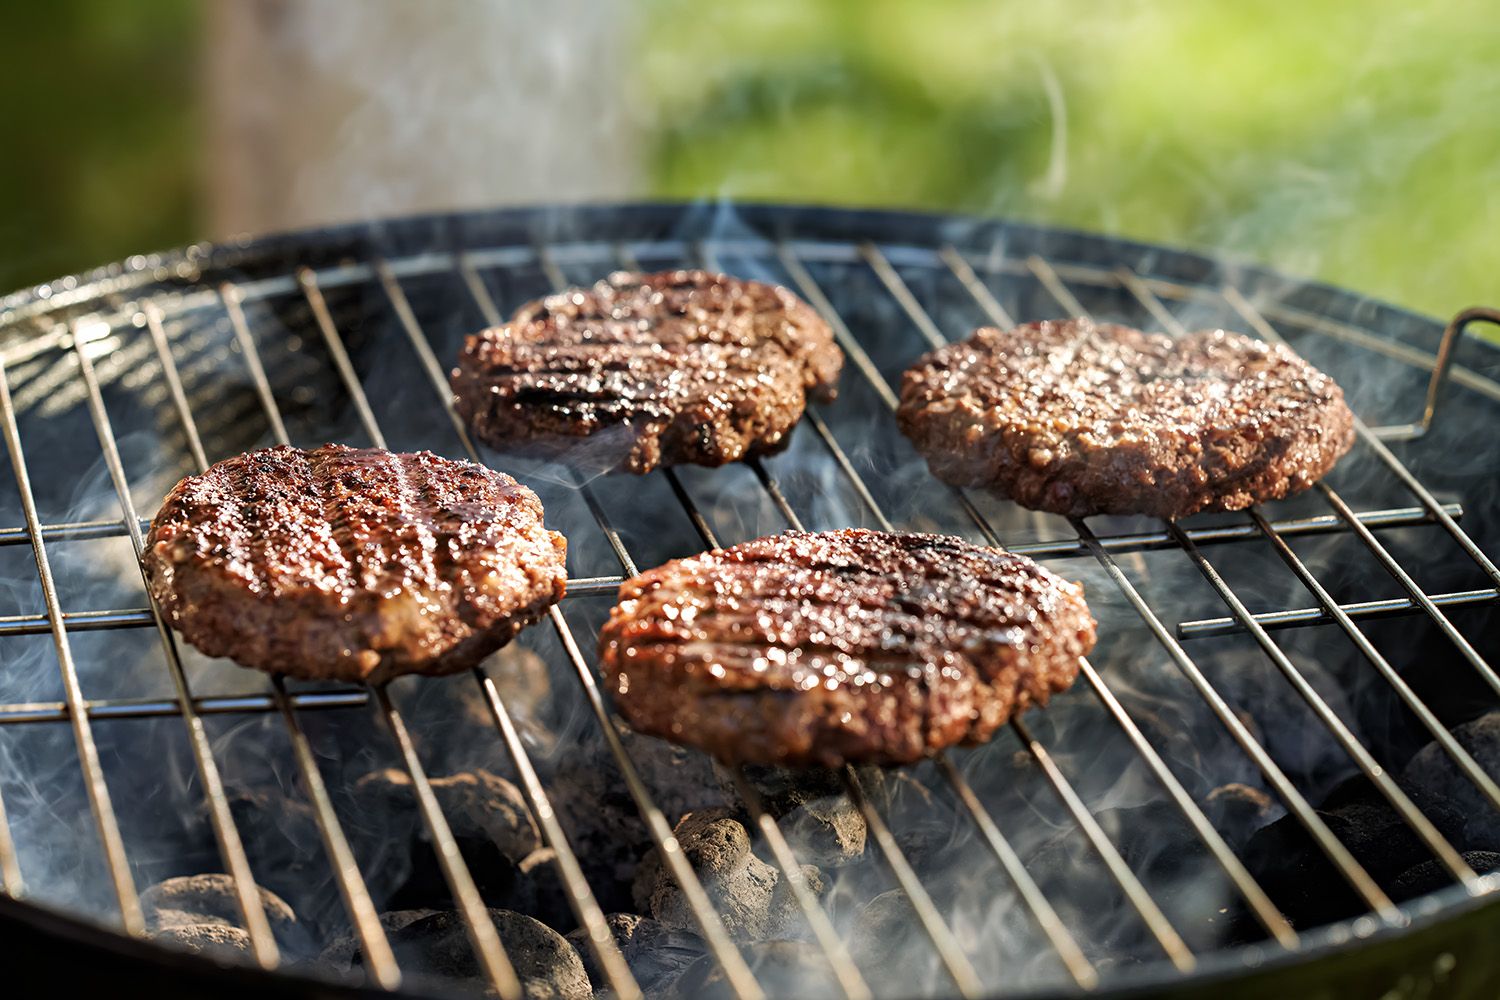 Hamburger or burger patties on a charcoal grill